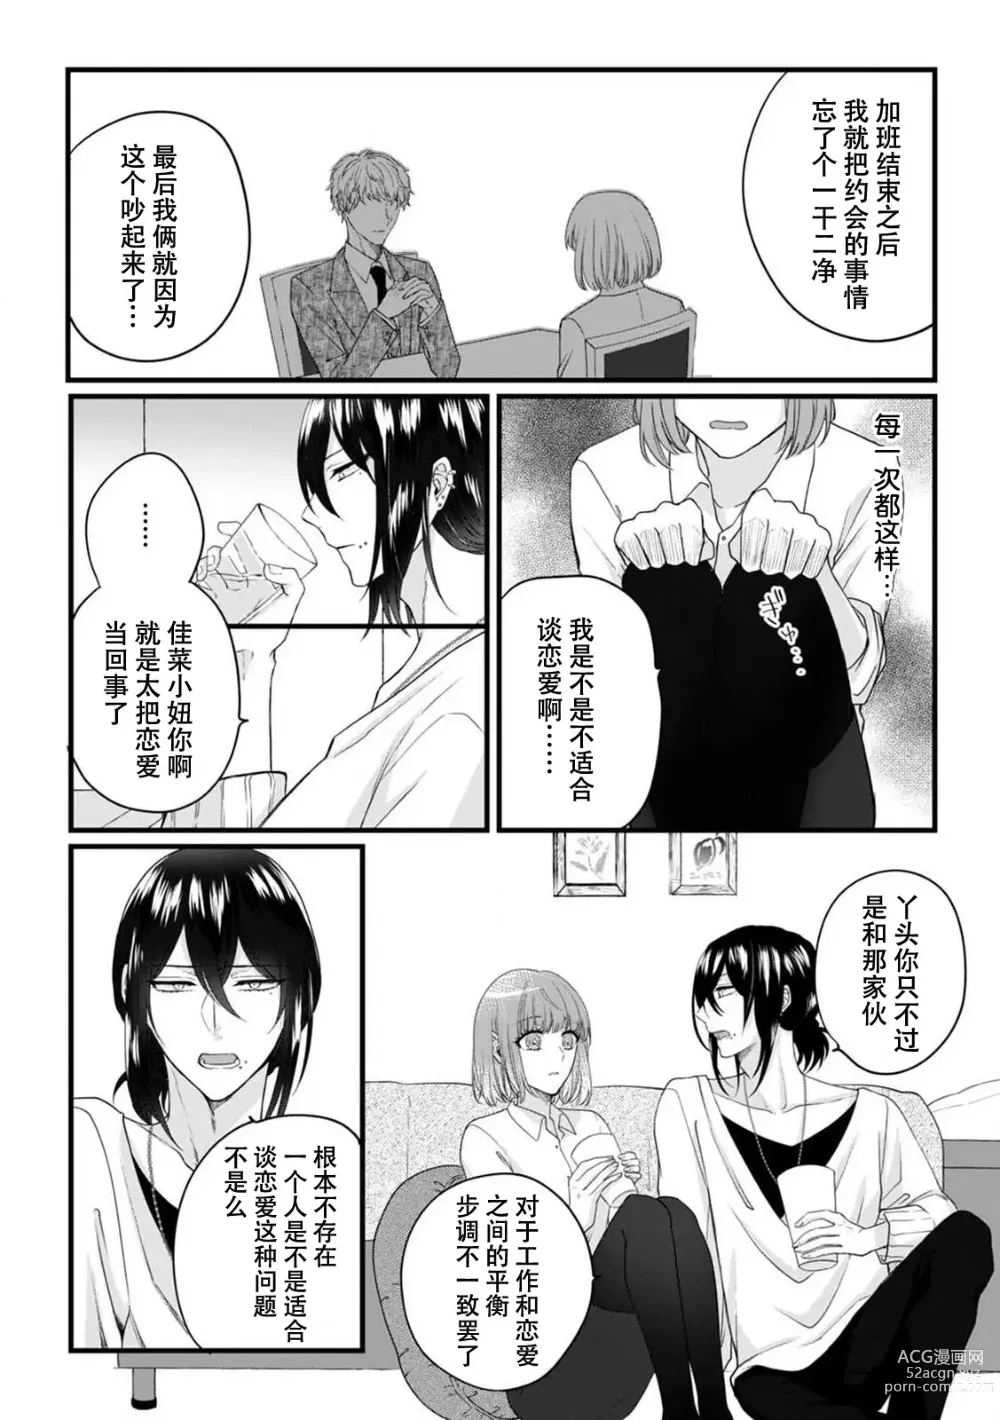 Page 6 of manga 弄湿我的是青梅竹马的男大姐 第一次见到……他认真的雄性一面。 1-5 end